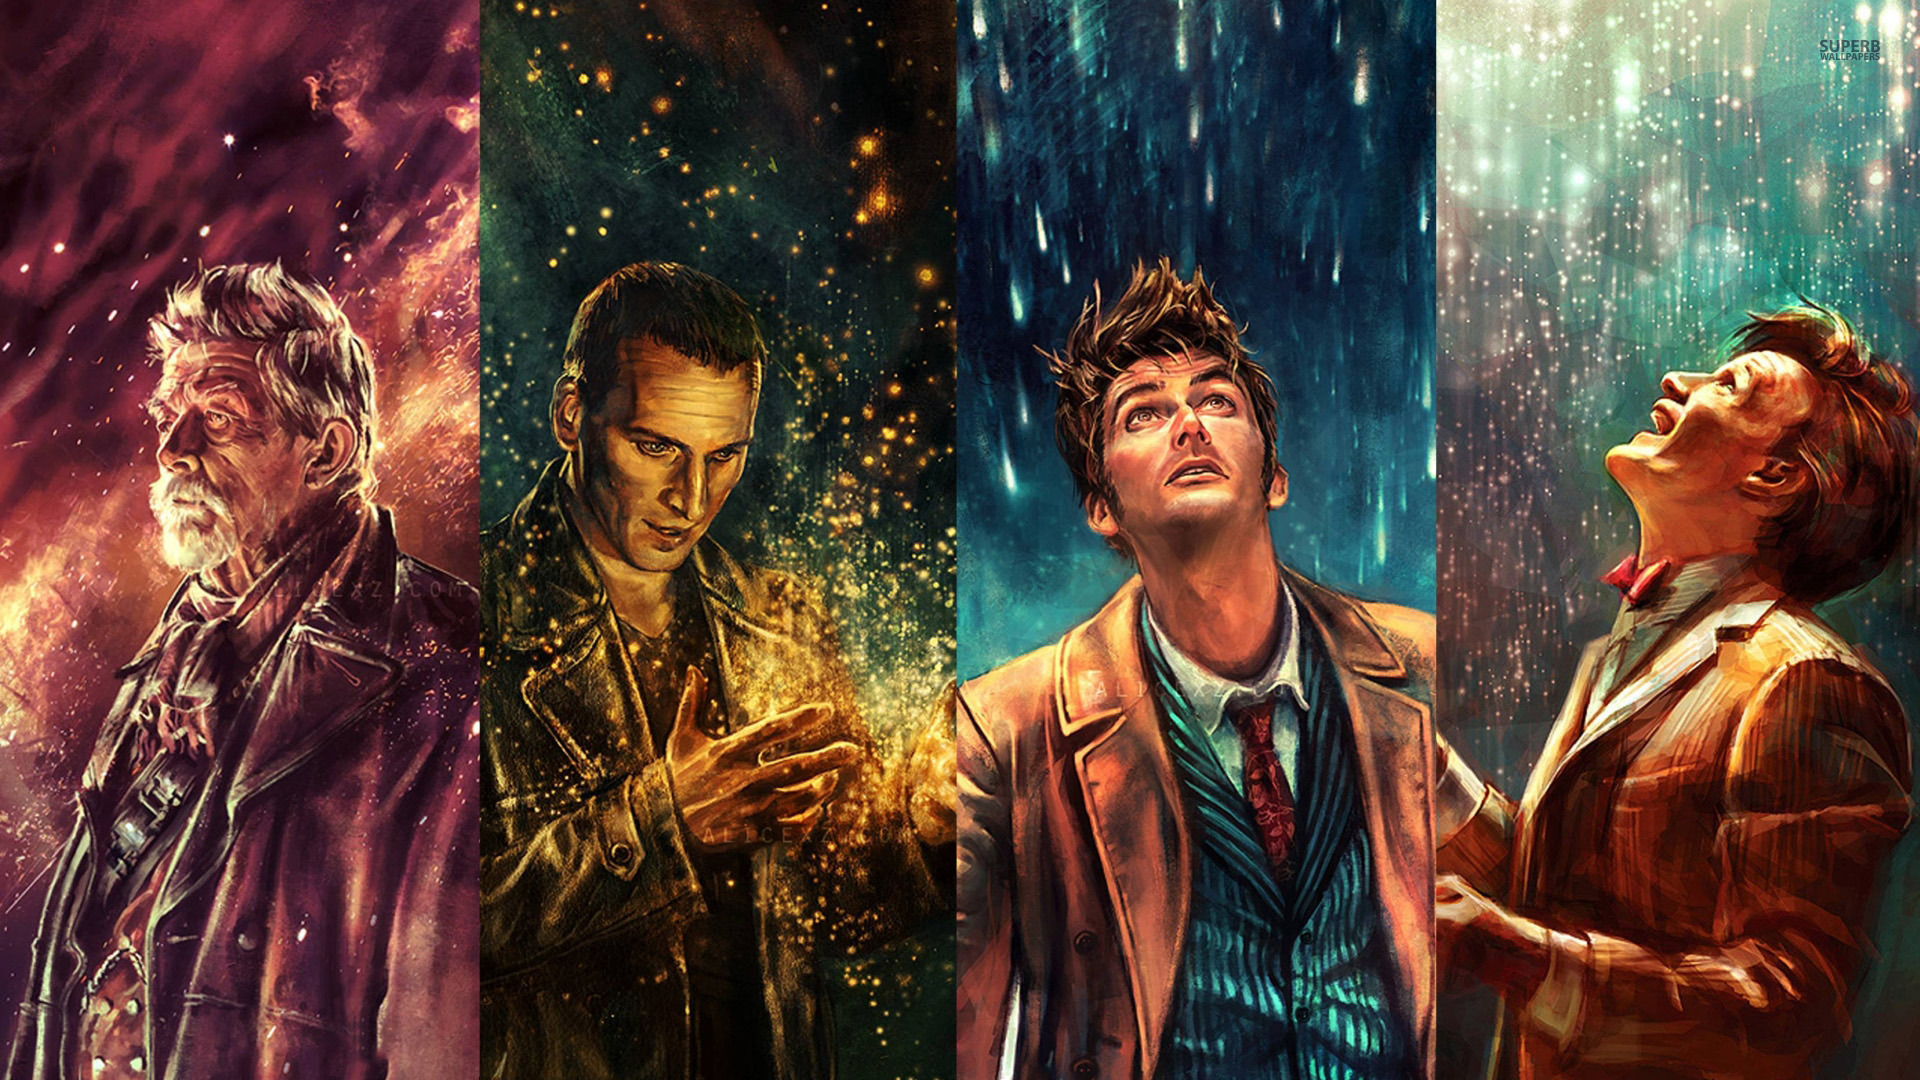 Doctor Who Wallpaper Images M3B » WALLPAPERUN.COM